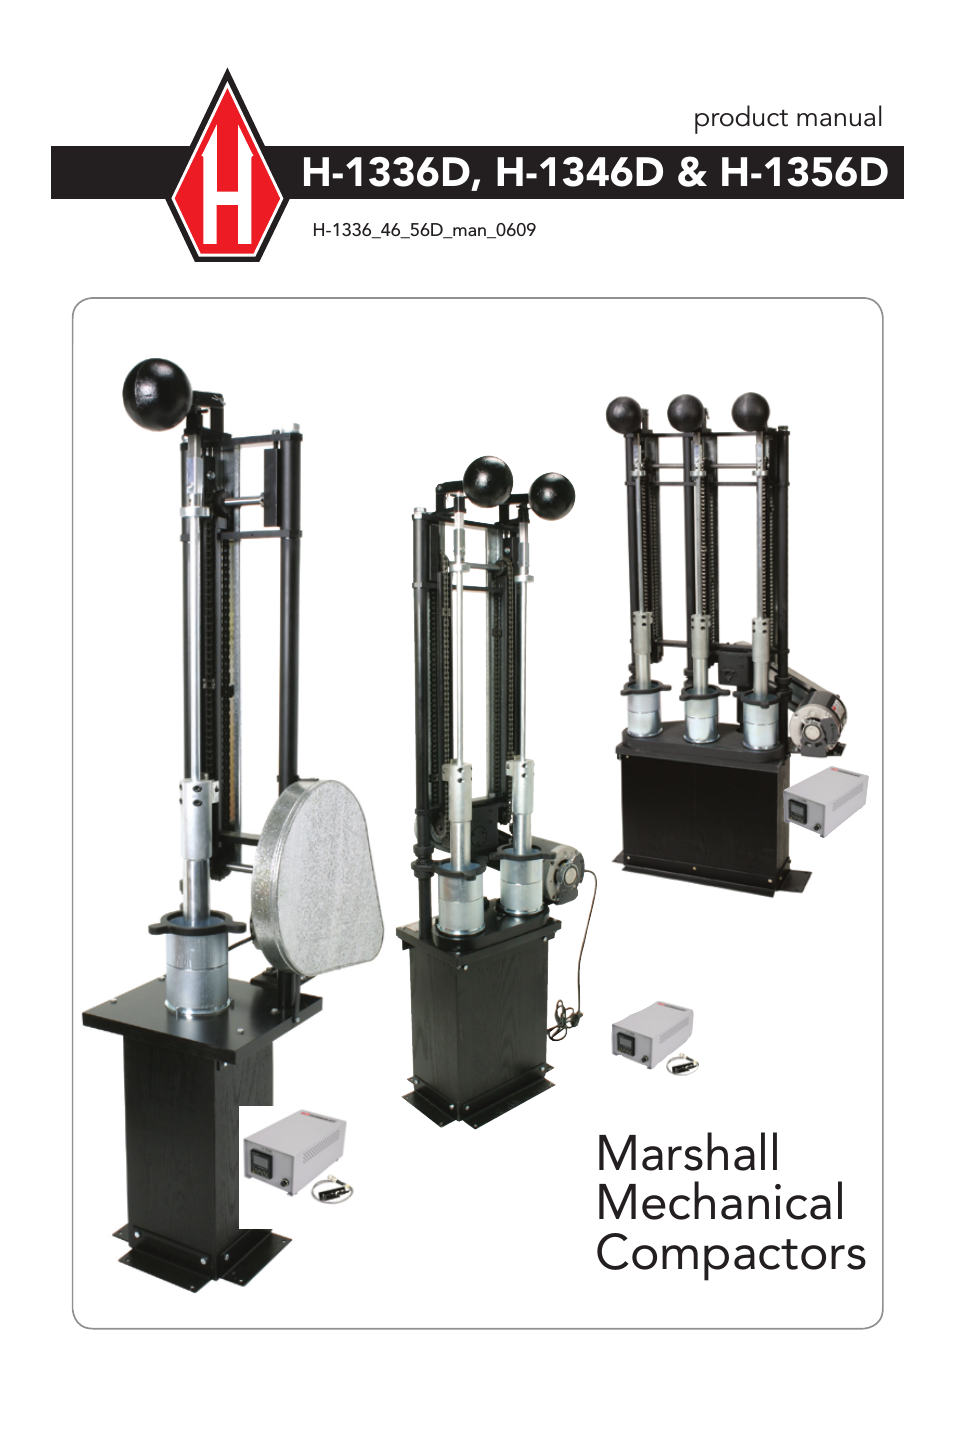 H-1356D Marshall Mechanical Compactors